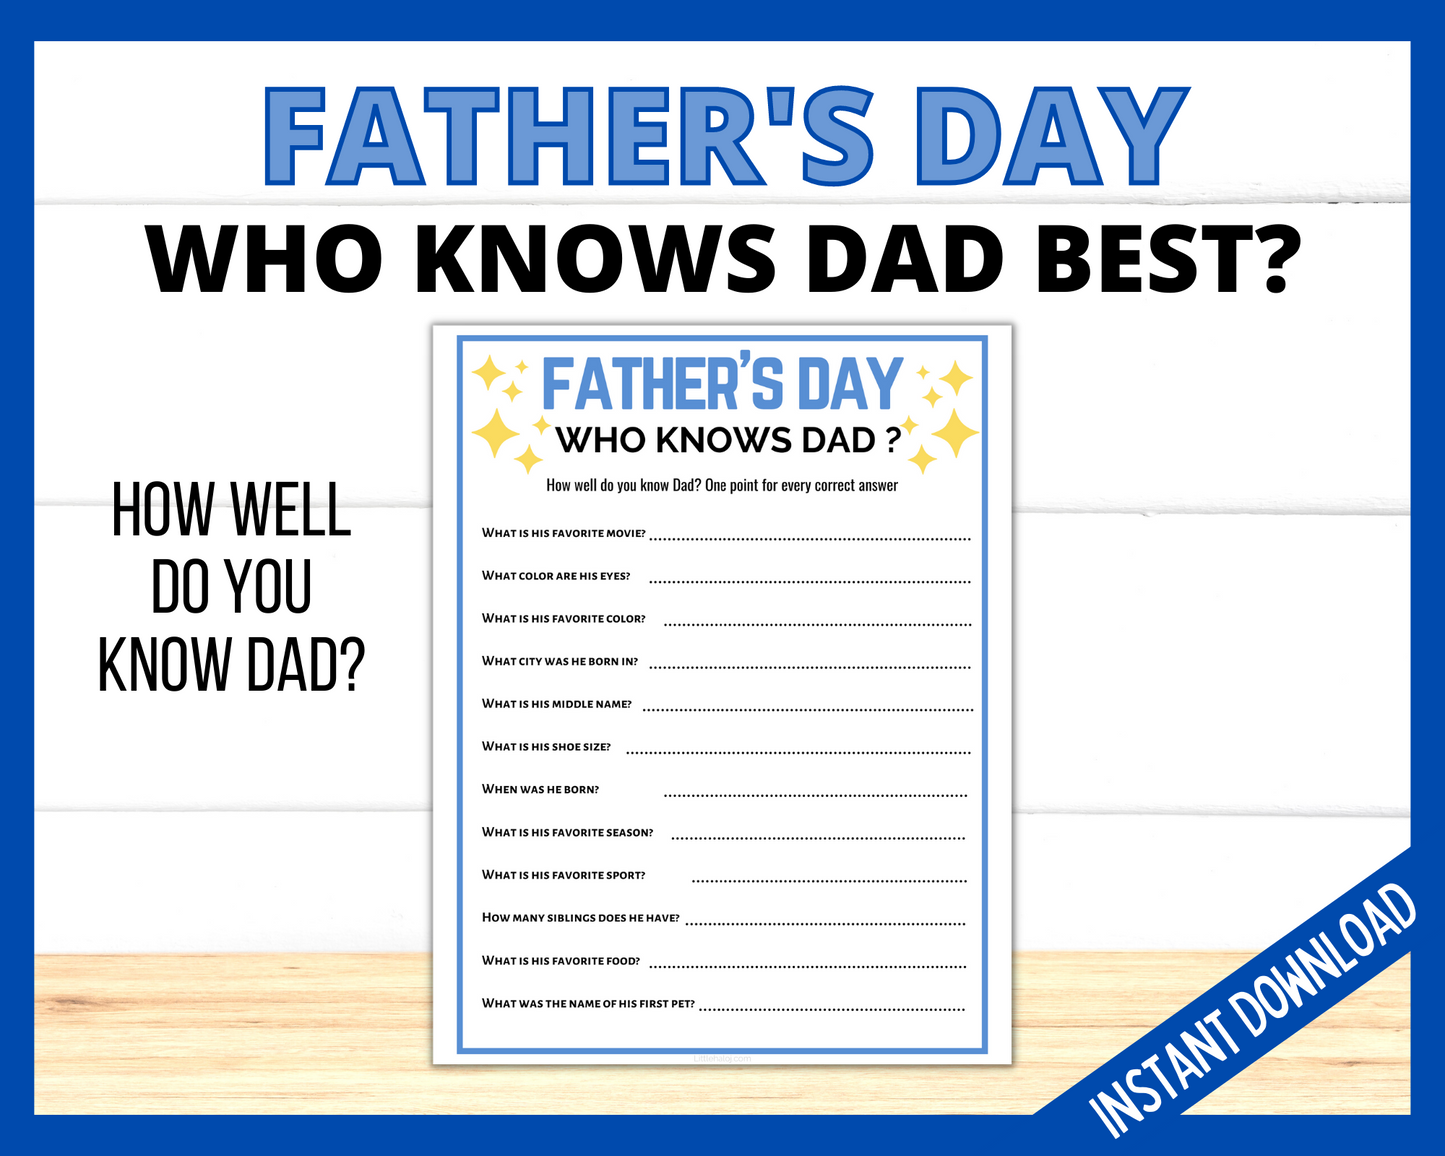 Who knows Dad Best Printable Quiz Game